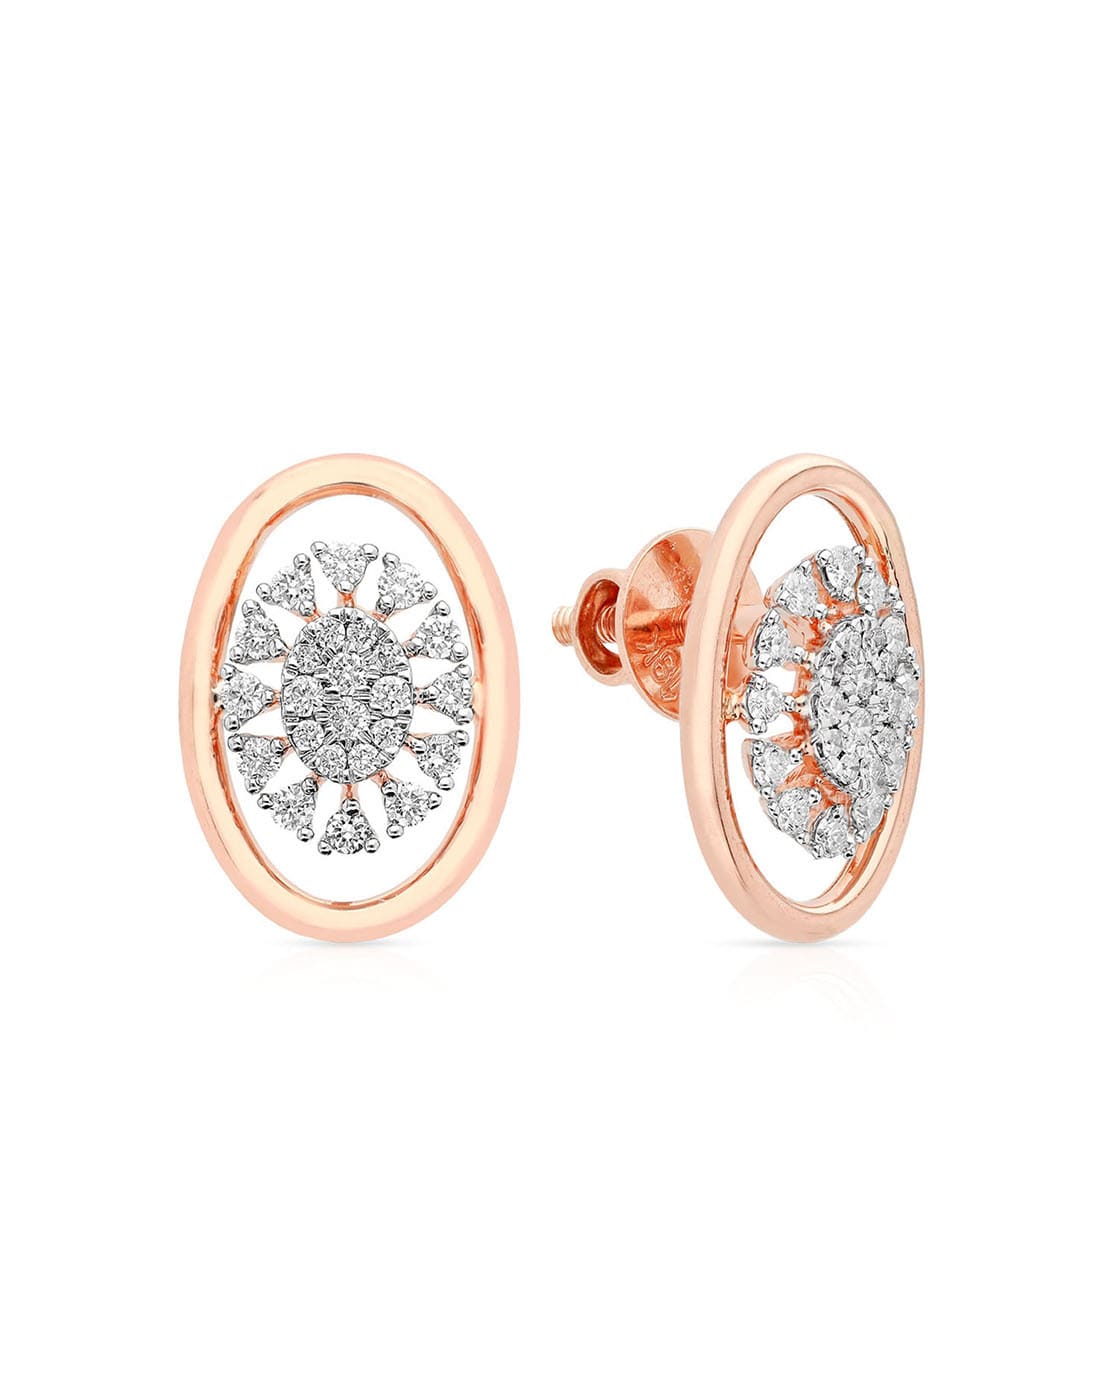 Gold And Diamond Earrings Dubai  Liali Jewellery